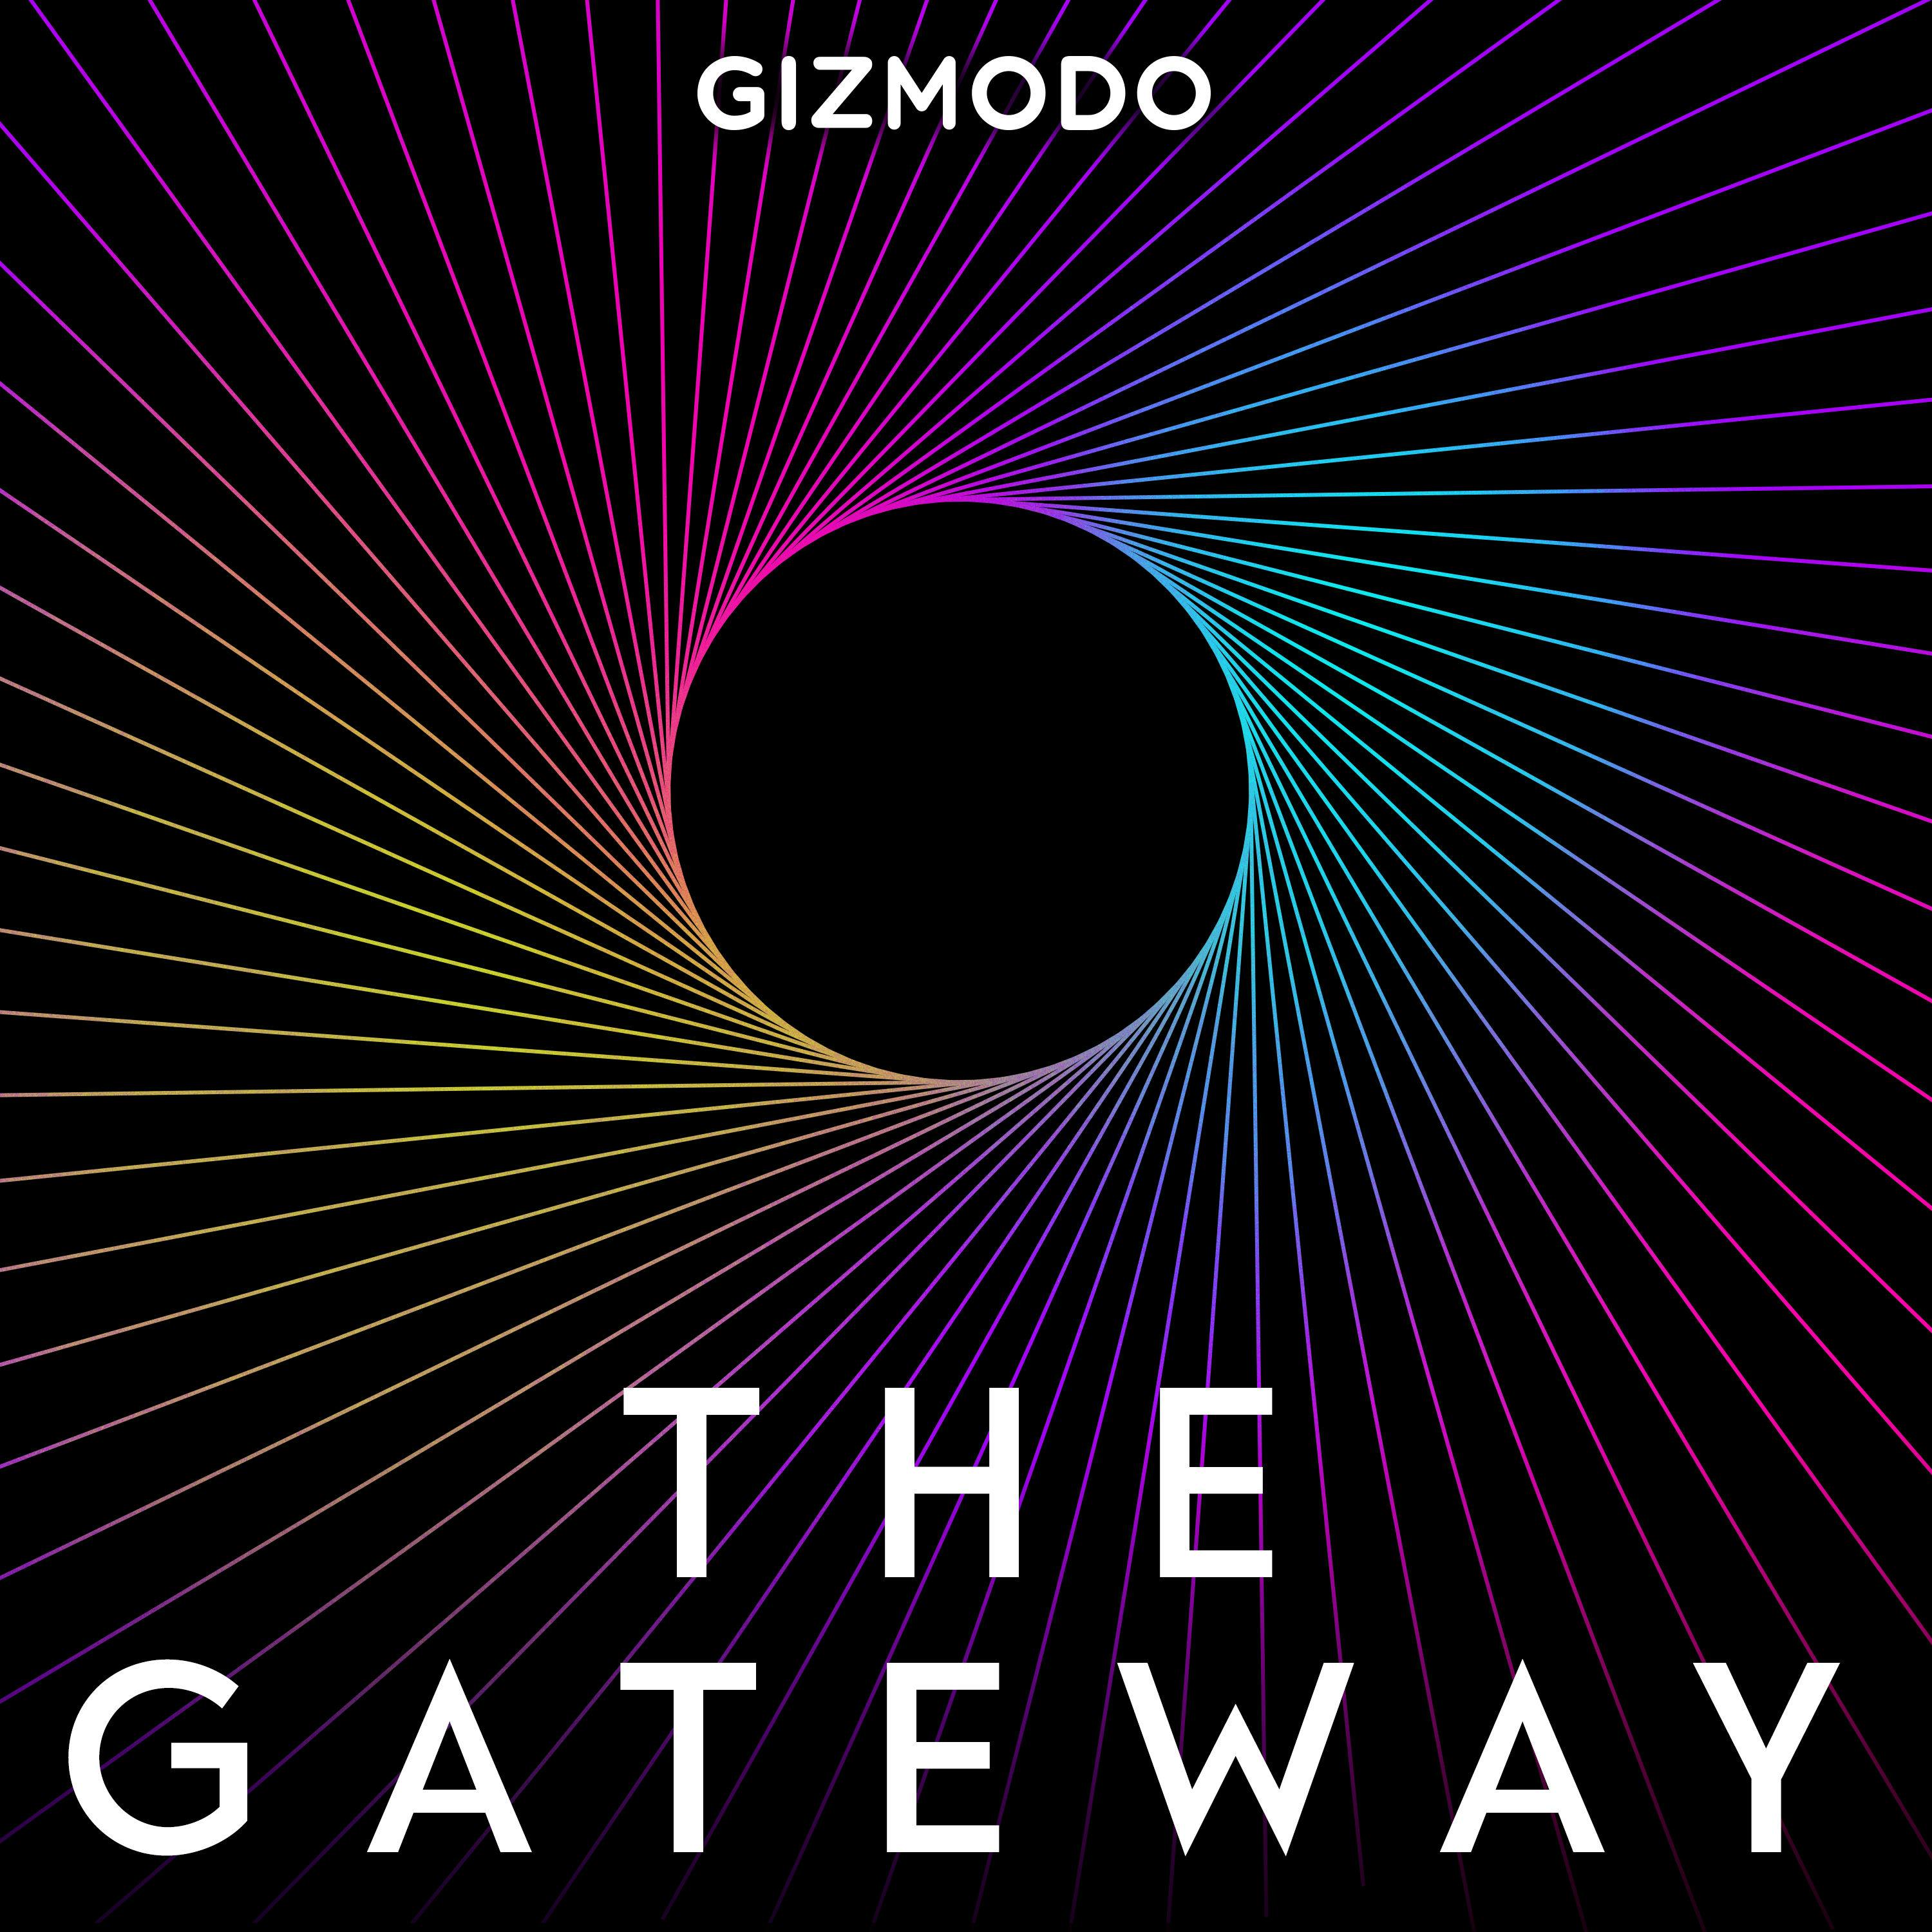 The Gateway: Teal Swan